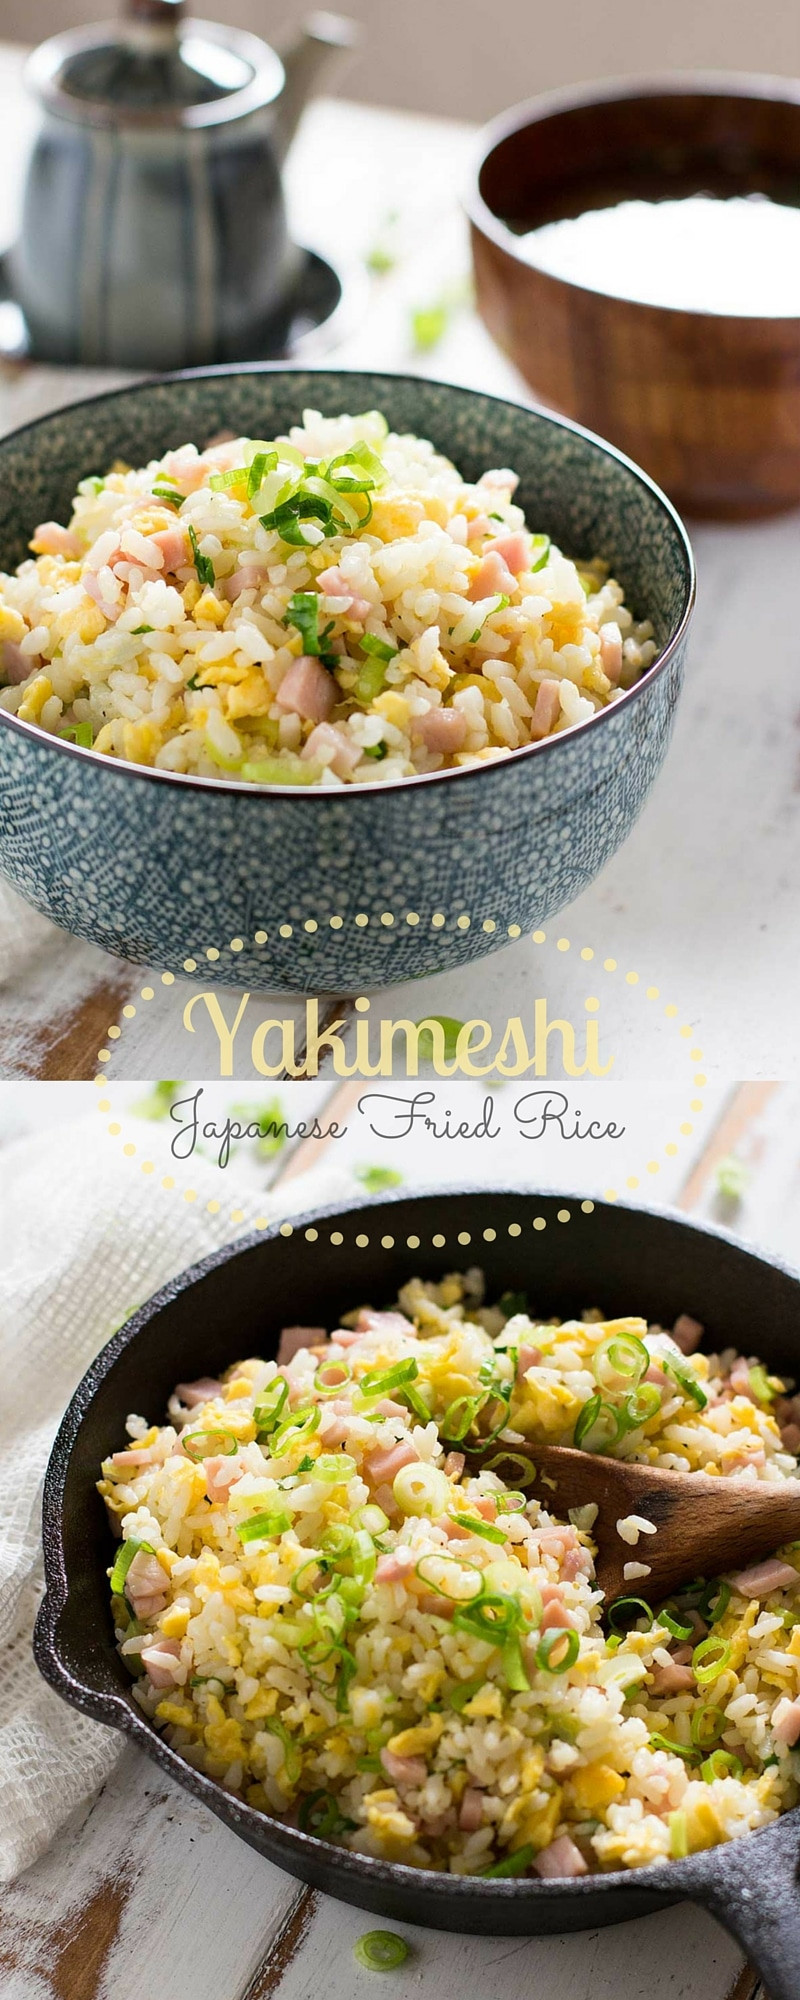 Japanese Fried Rice Recipe
 Yakimeshi Japanese Fried Rice 焼き飯